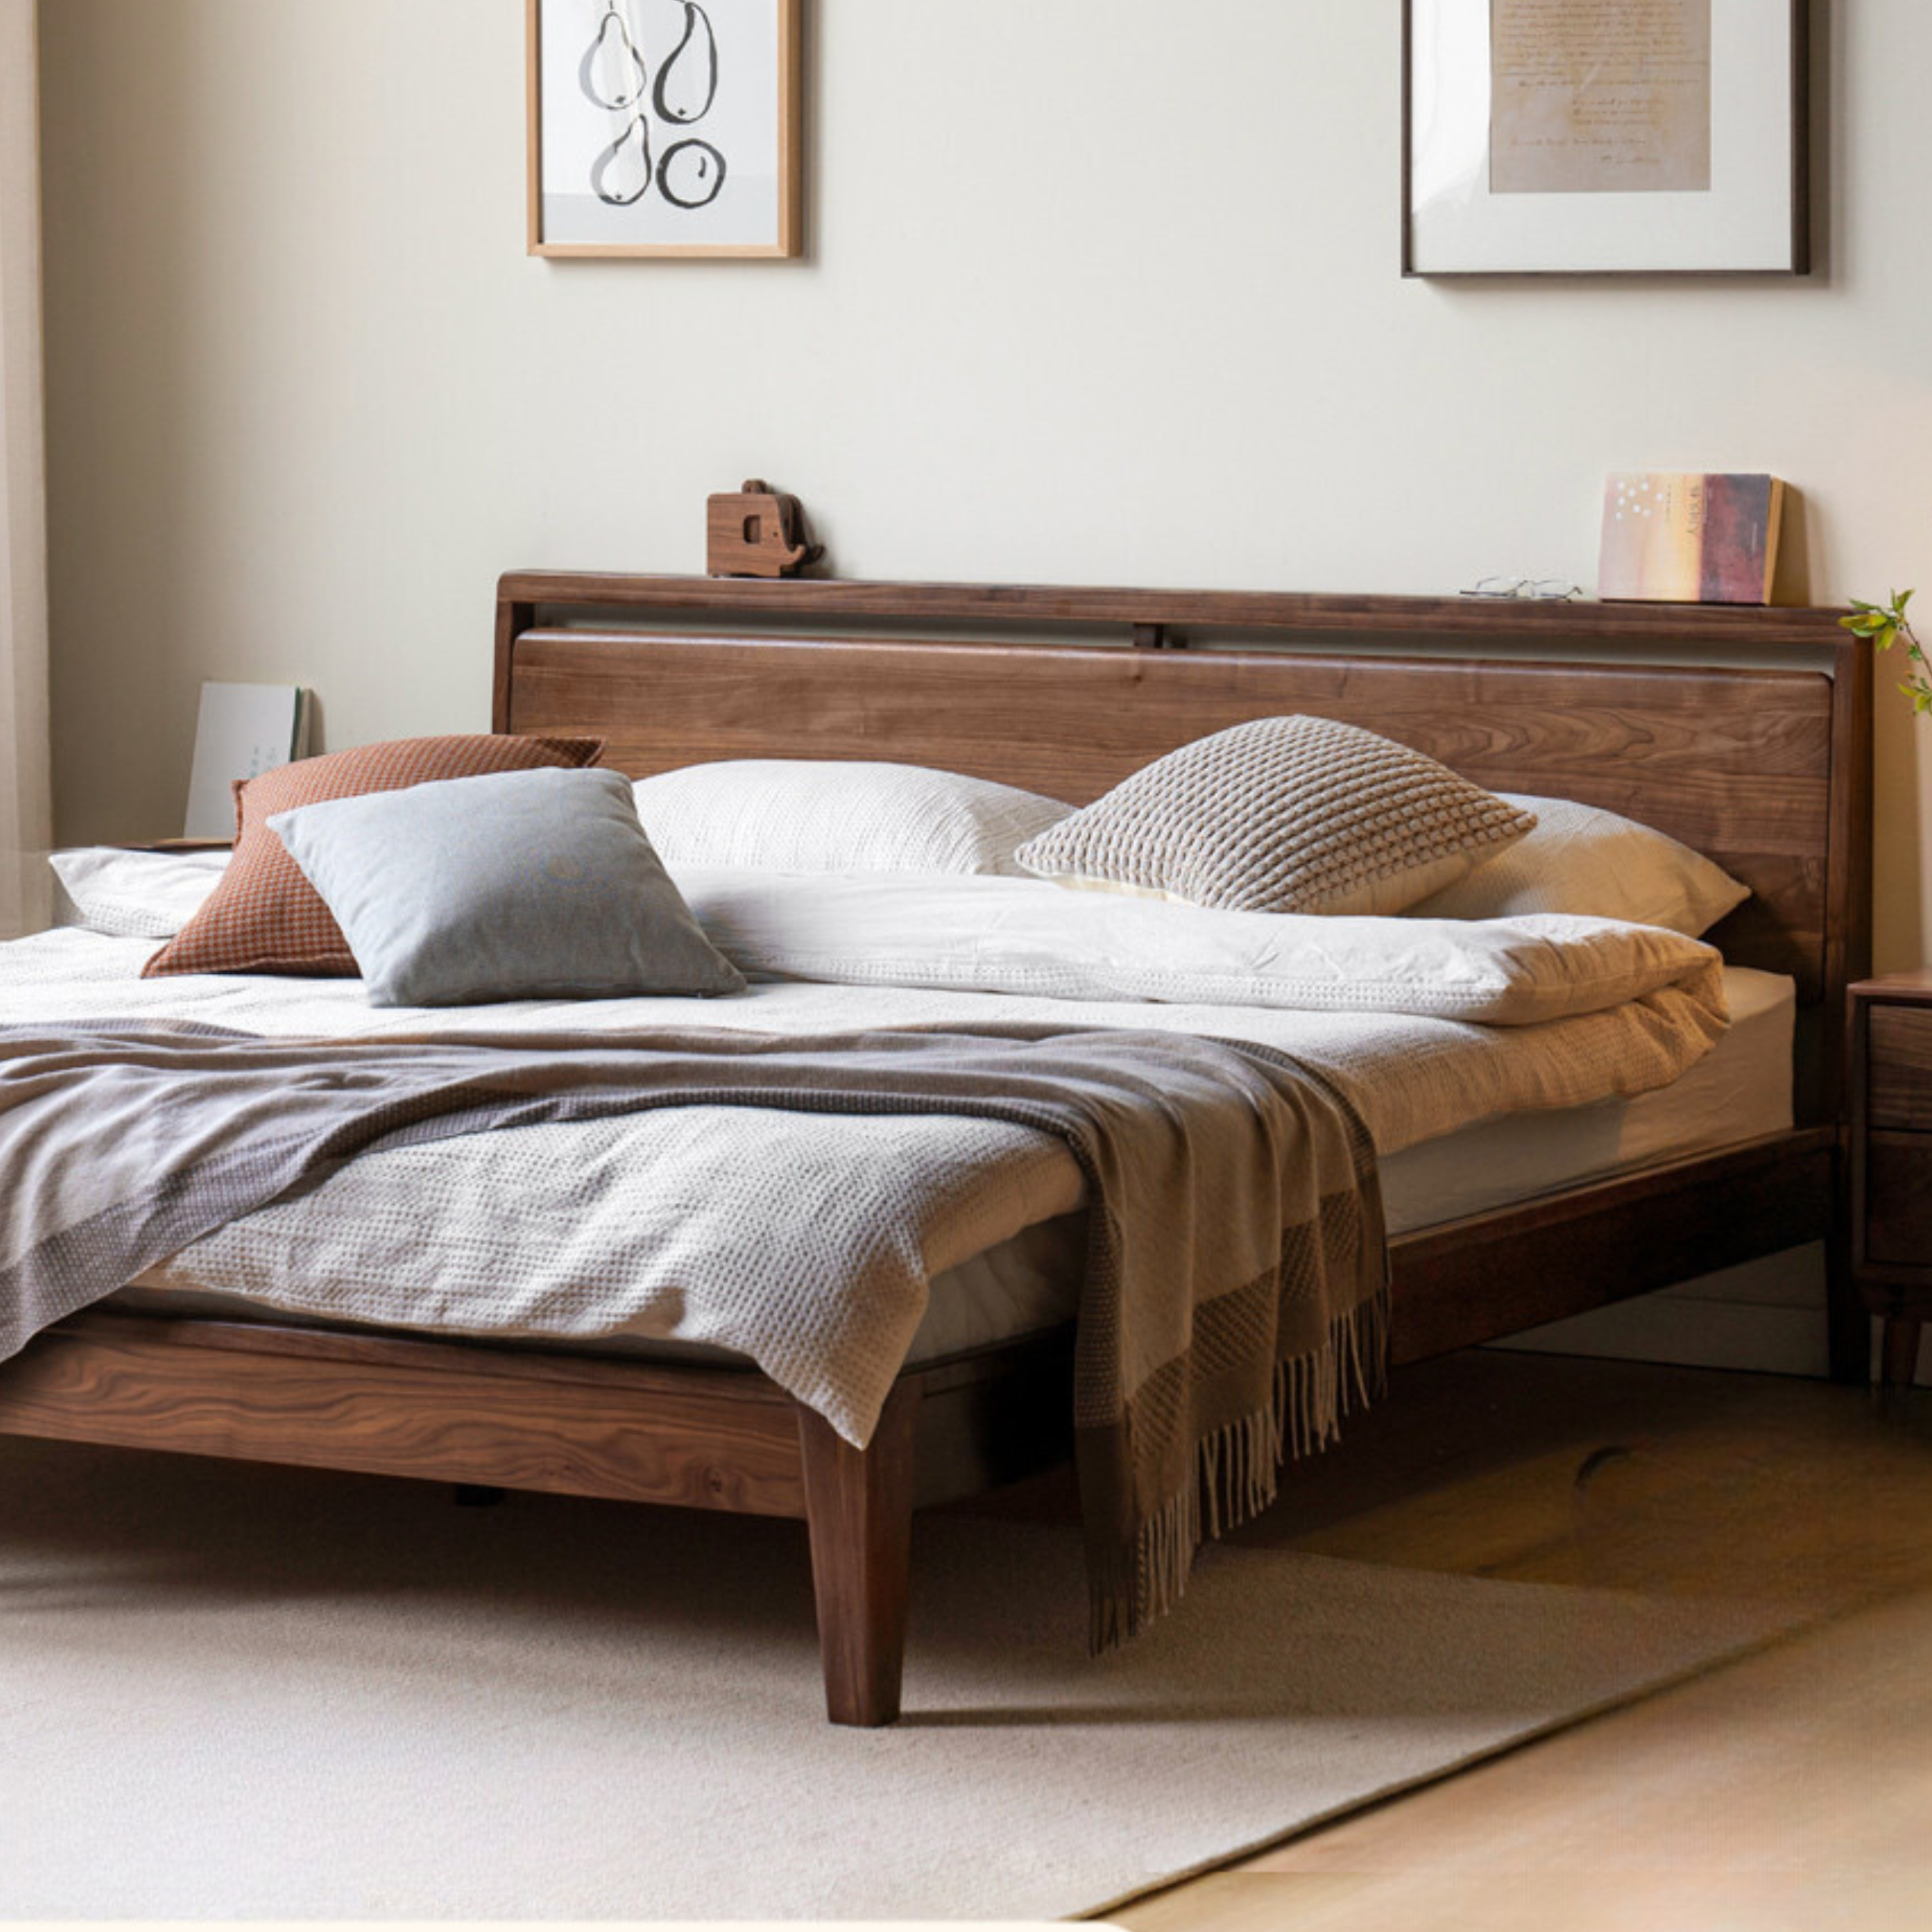 Black walnut solid wood bed"